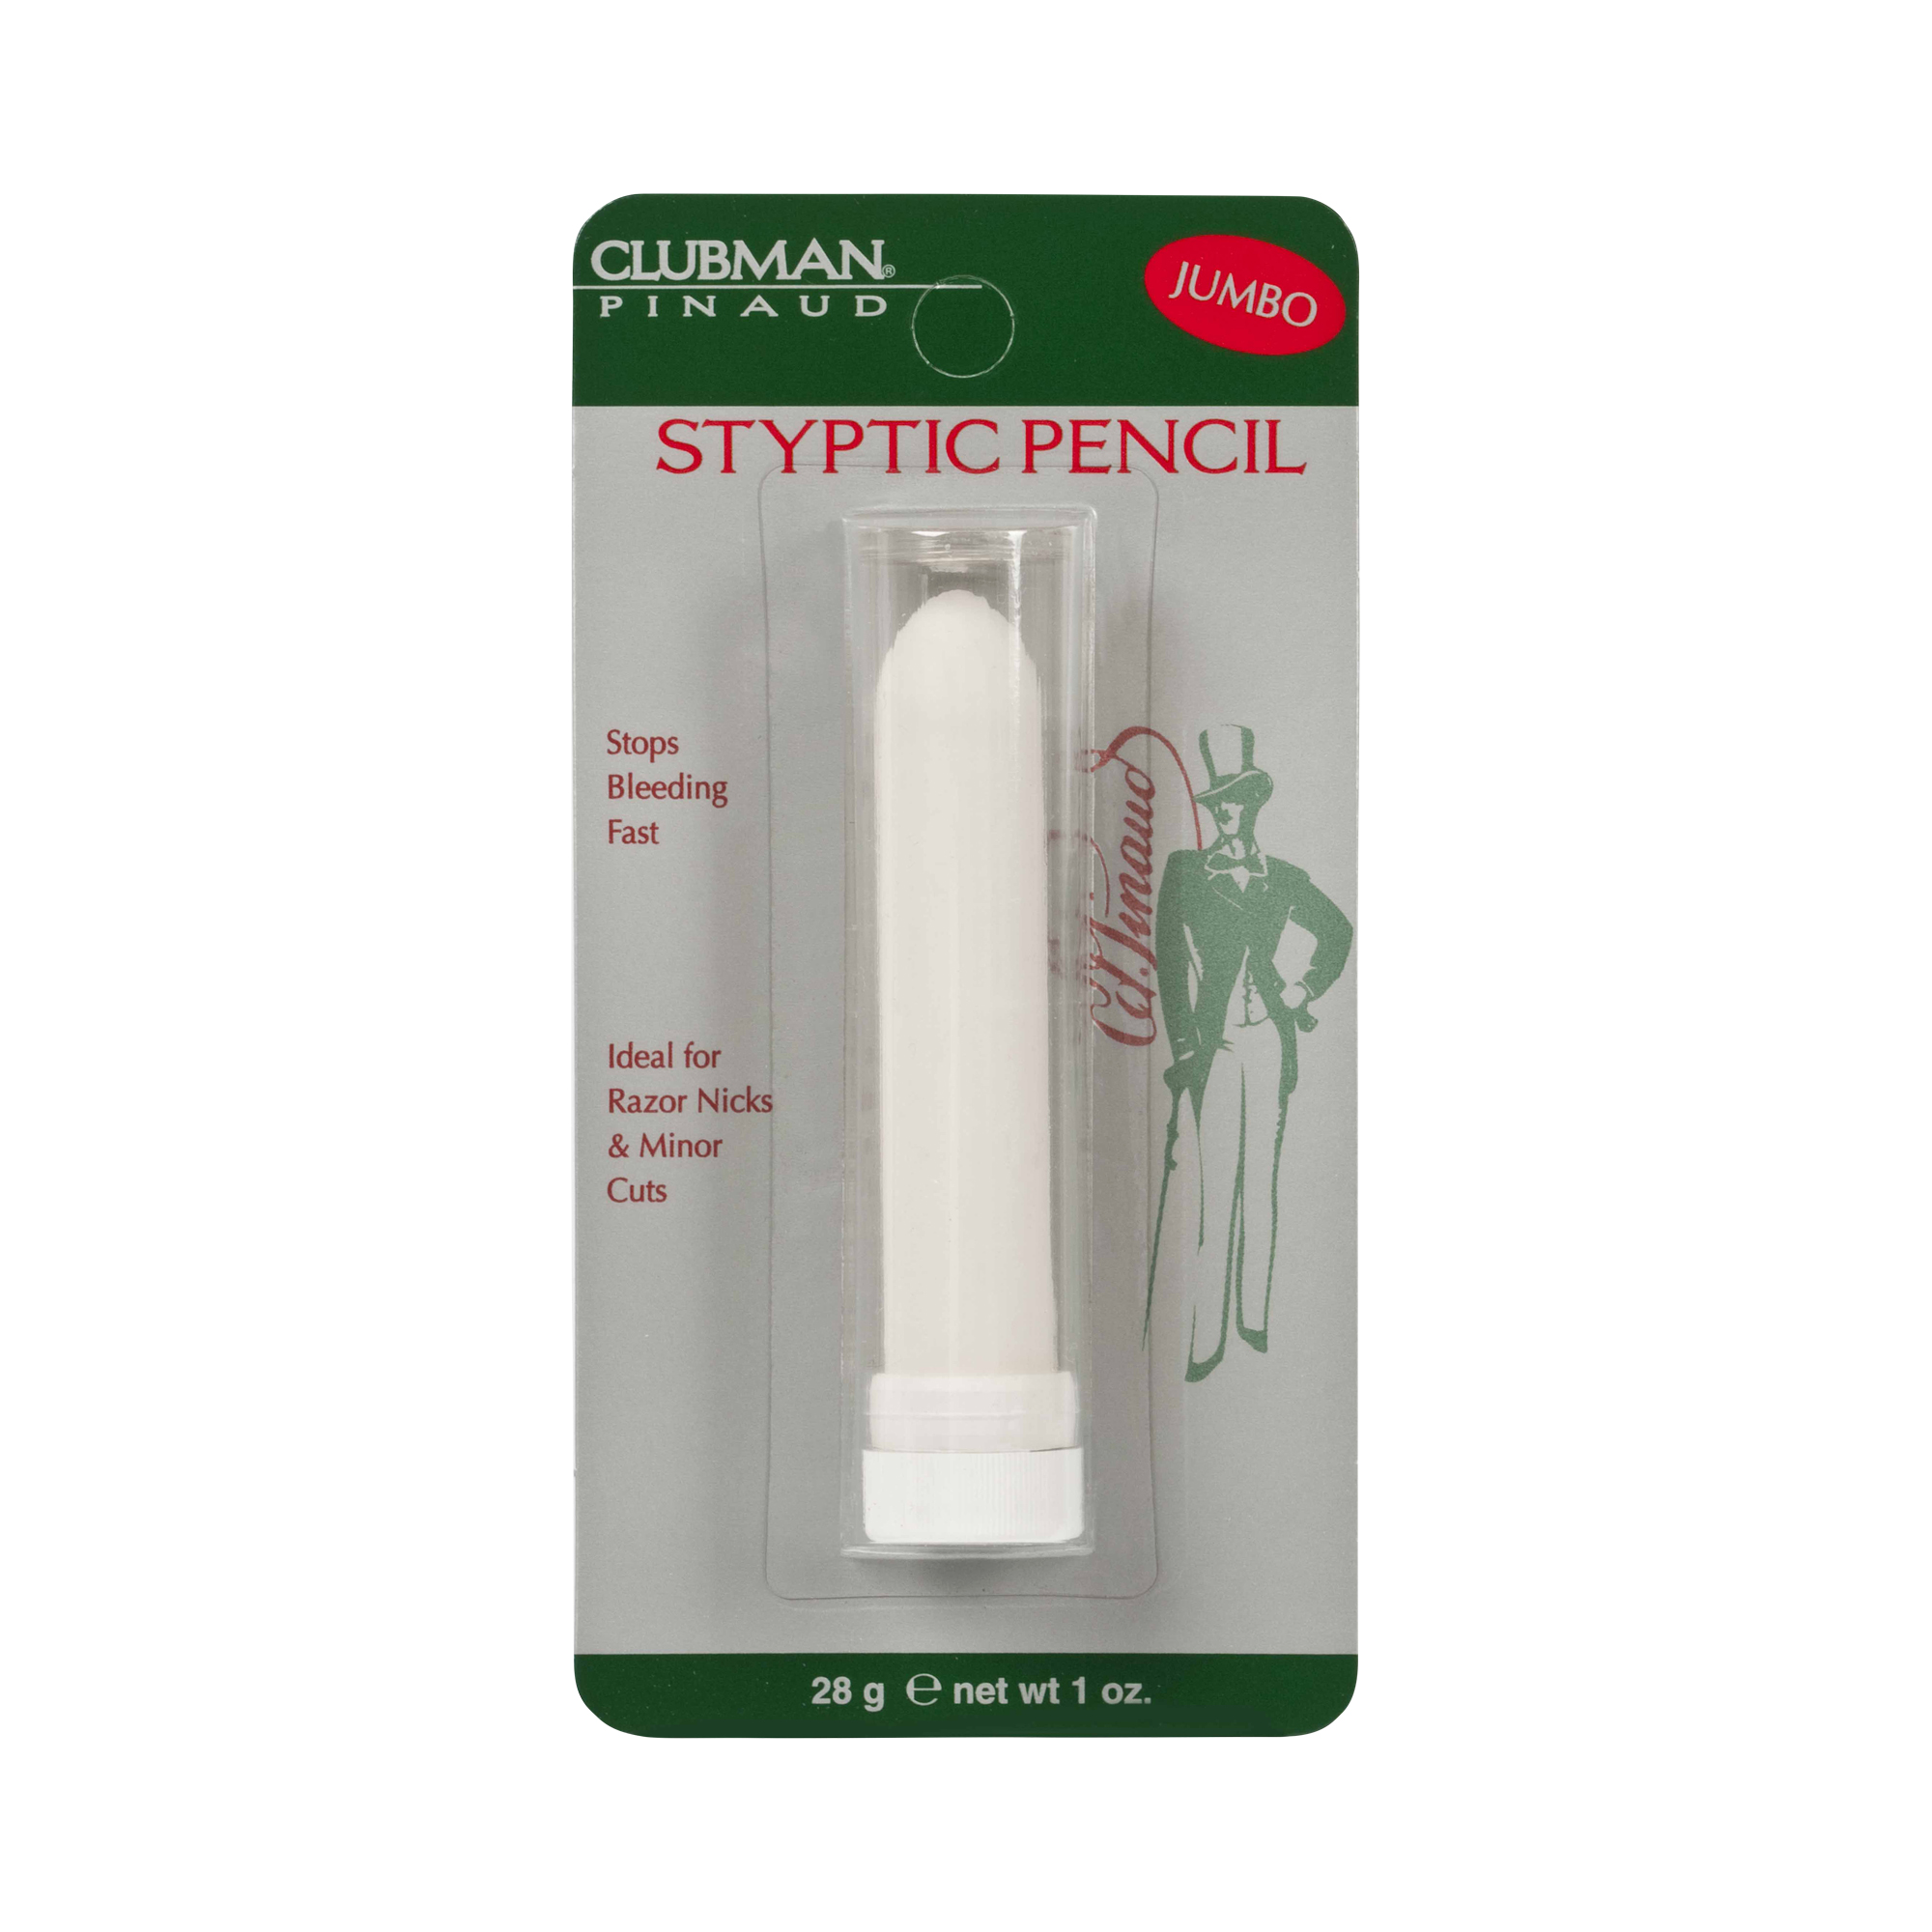 Clubman Pinaud - Styptic Pencil Jumbo - Alaunstift